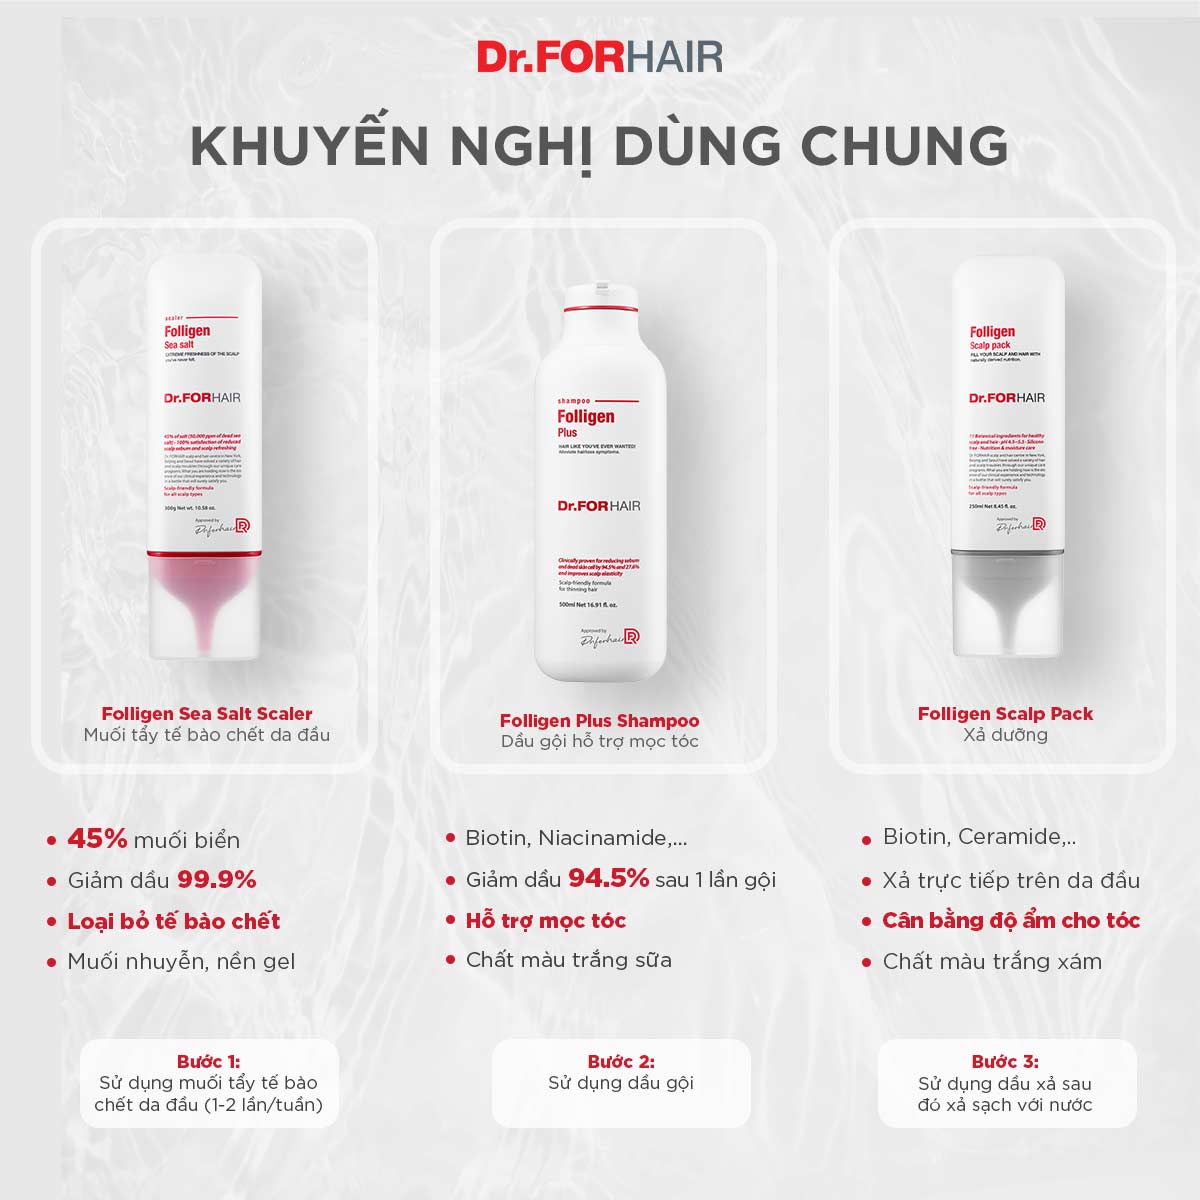 Dr.Forhair Folligen Shampoo Original (NK)